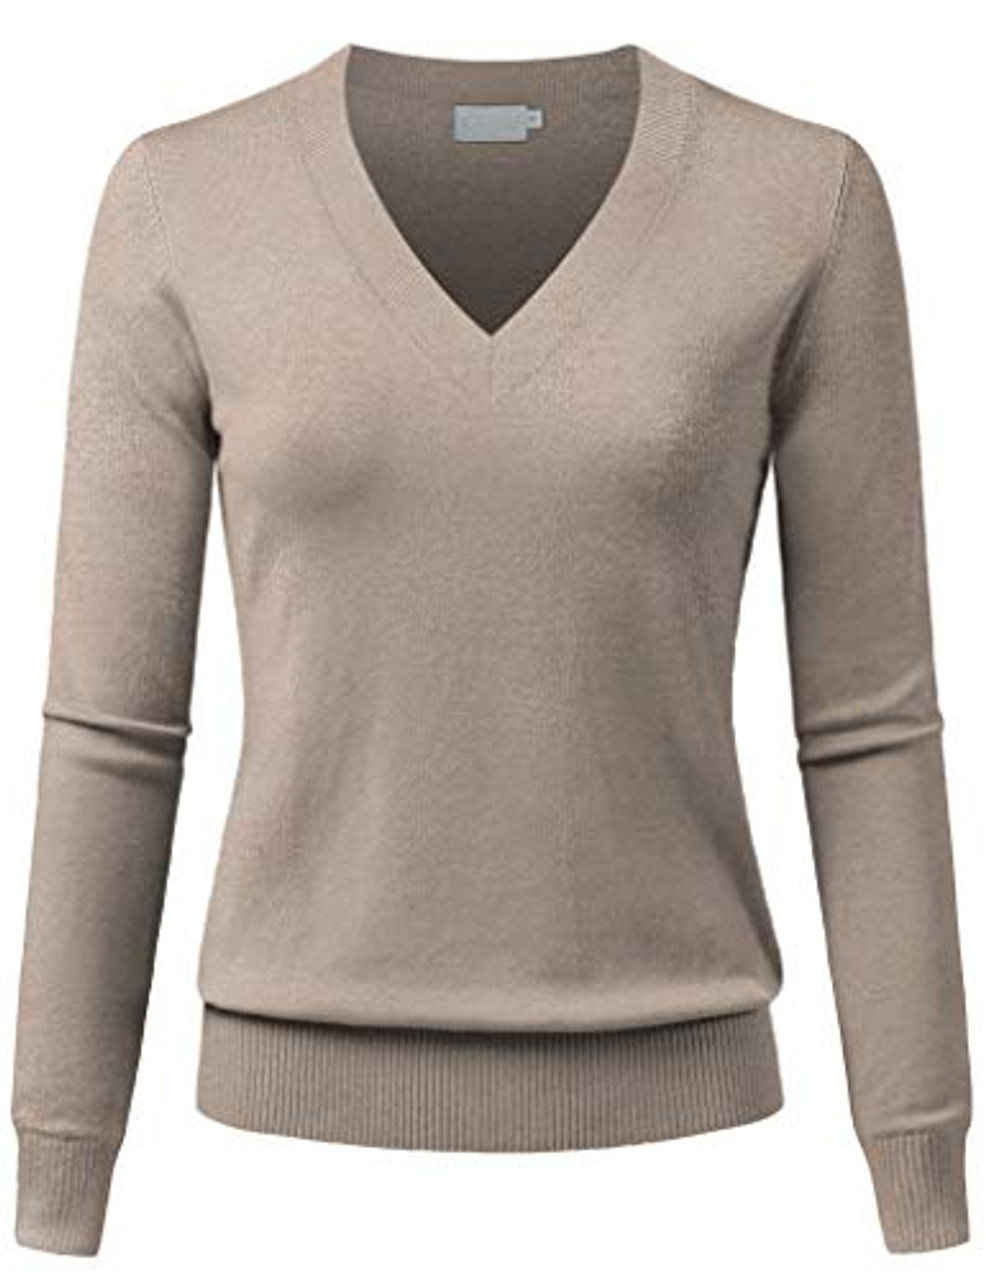 JSCEND Women's Mock Neck Long Sleeve Solid Basic Soft Stretch Pullover Knit Sweater 